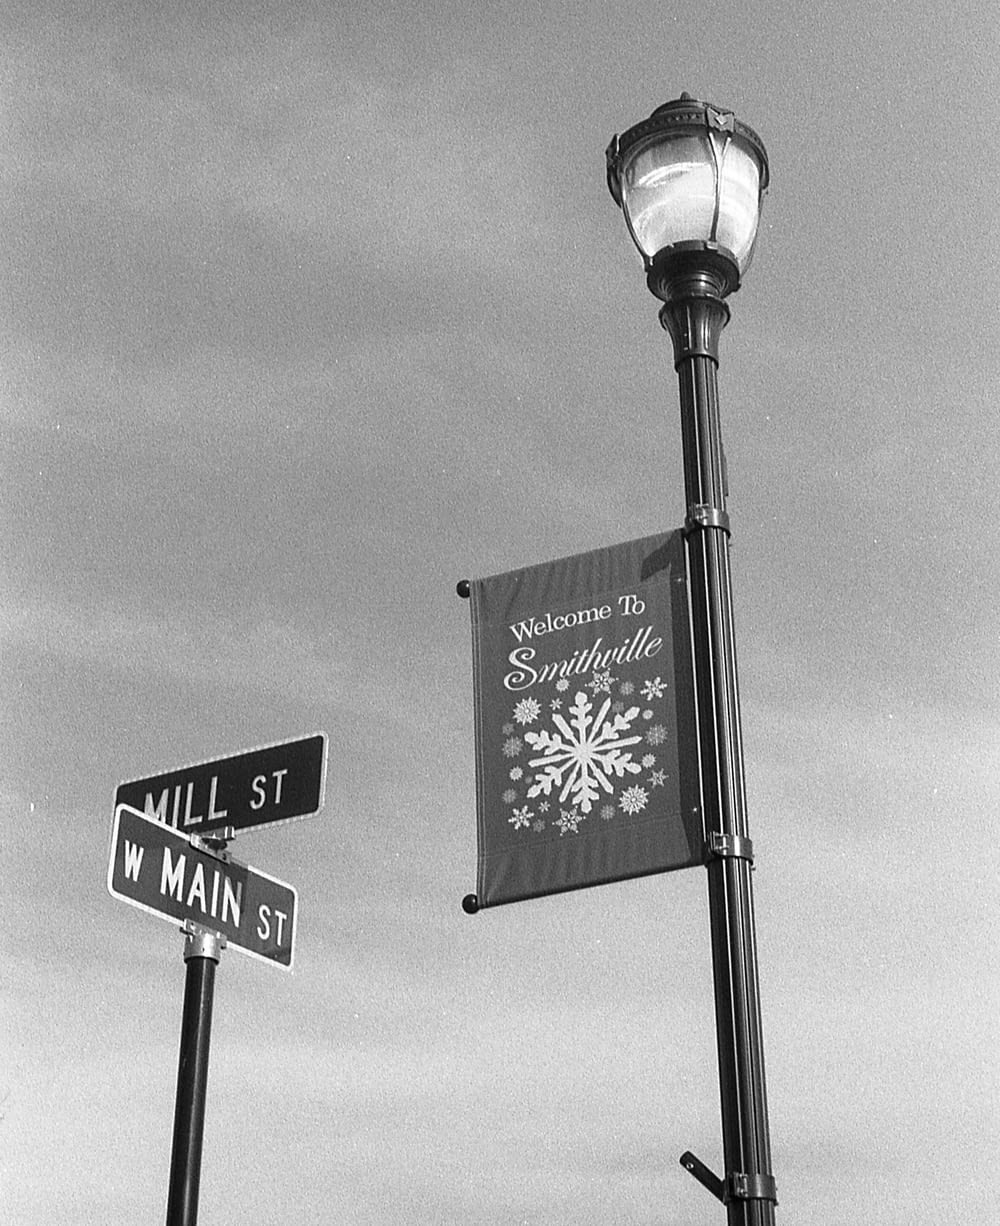 a street sign and a street light on a pole